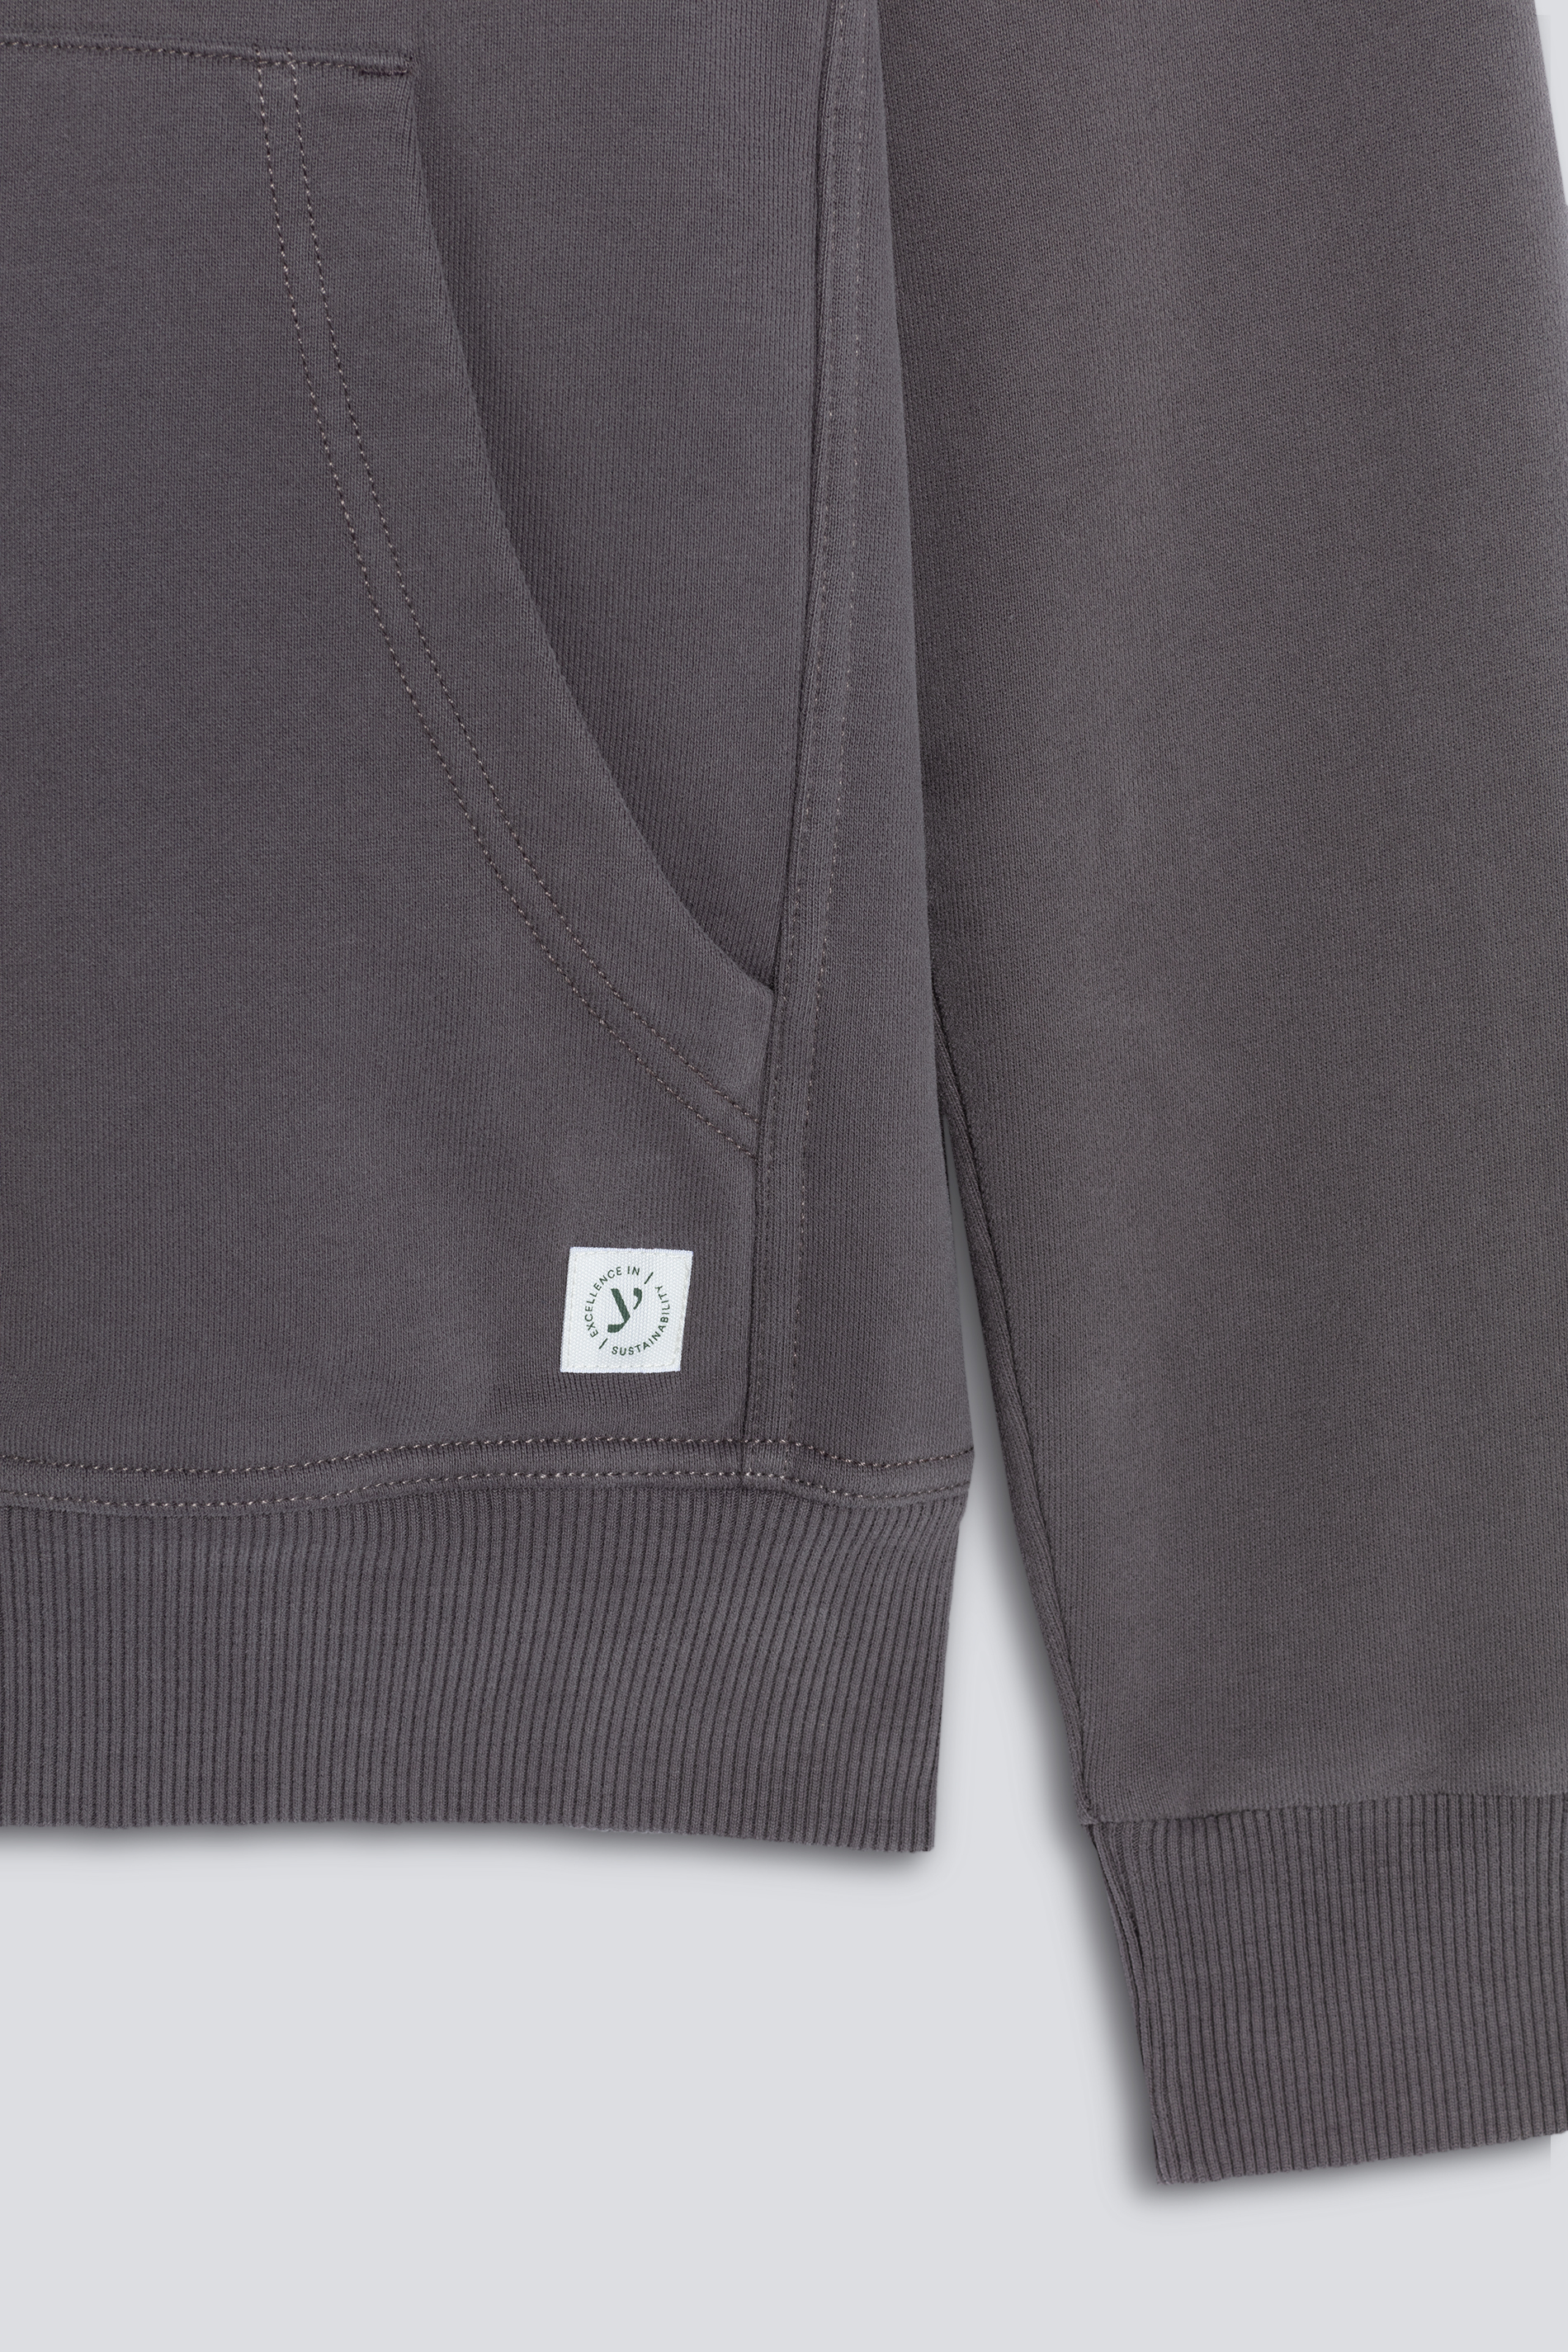 Hoodie sweatshirt Eiffel Tower Serie Soft Felpa Detail View 01 | mey®